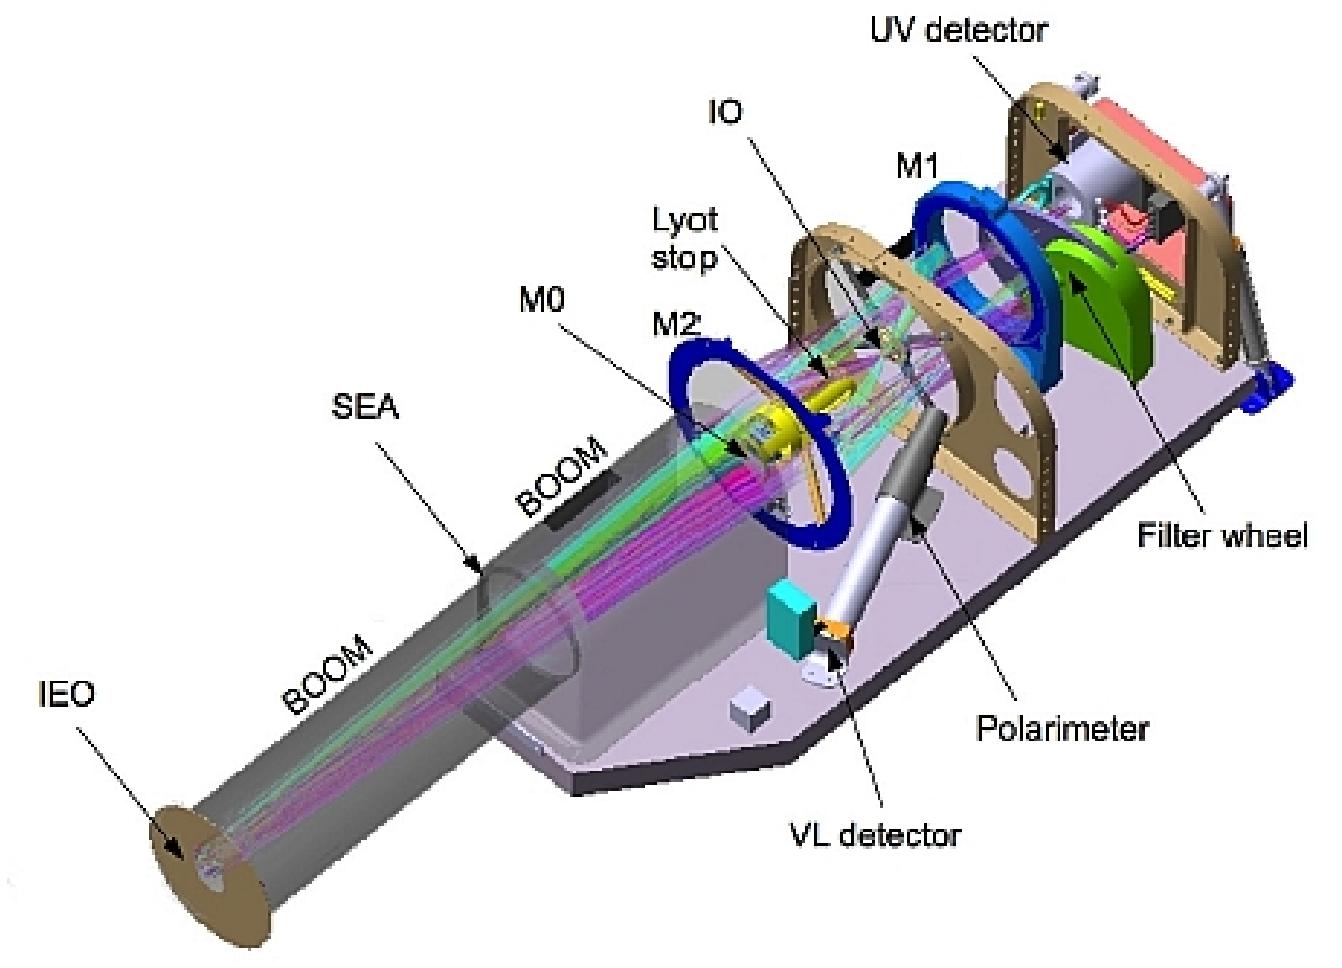 Figure 107: 3D view of the METIS layout (image credit: METIS consortium)